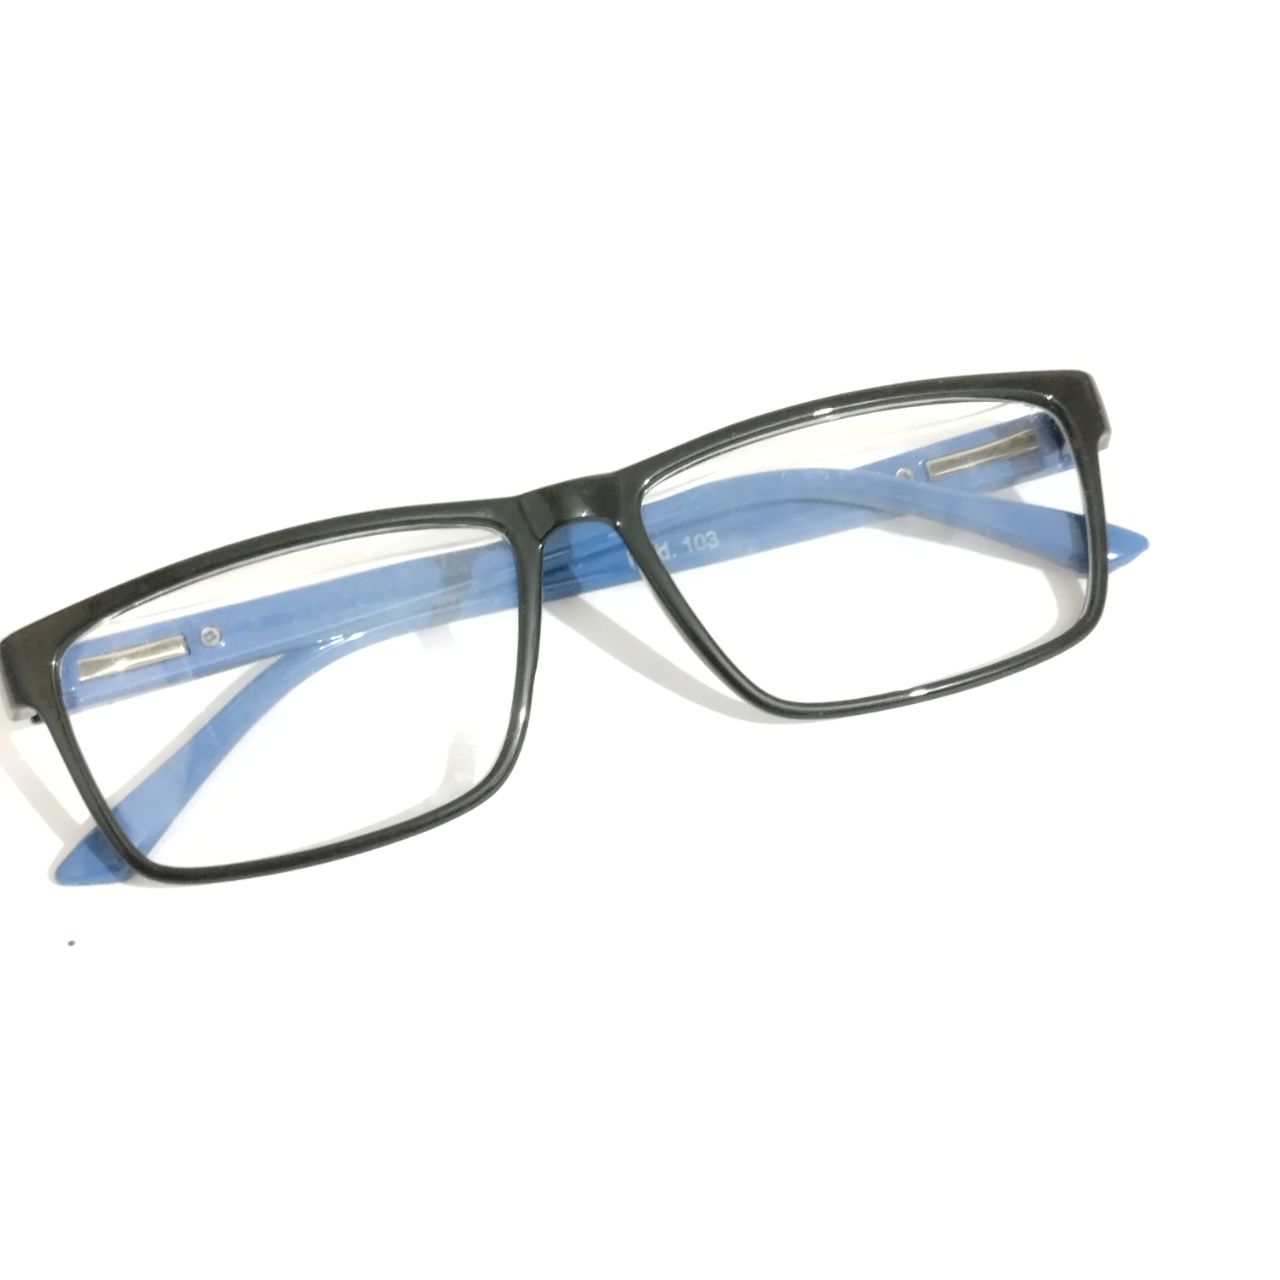 ReviveVision Full Frame Ptosis Crutch Glasses